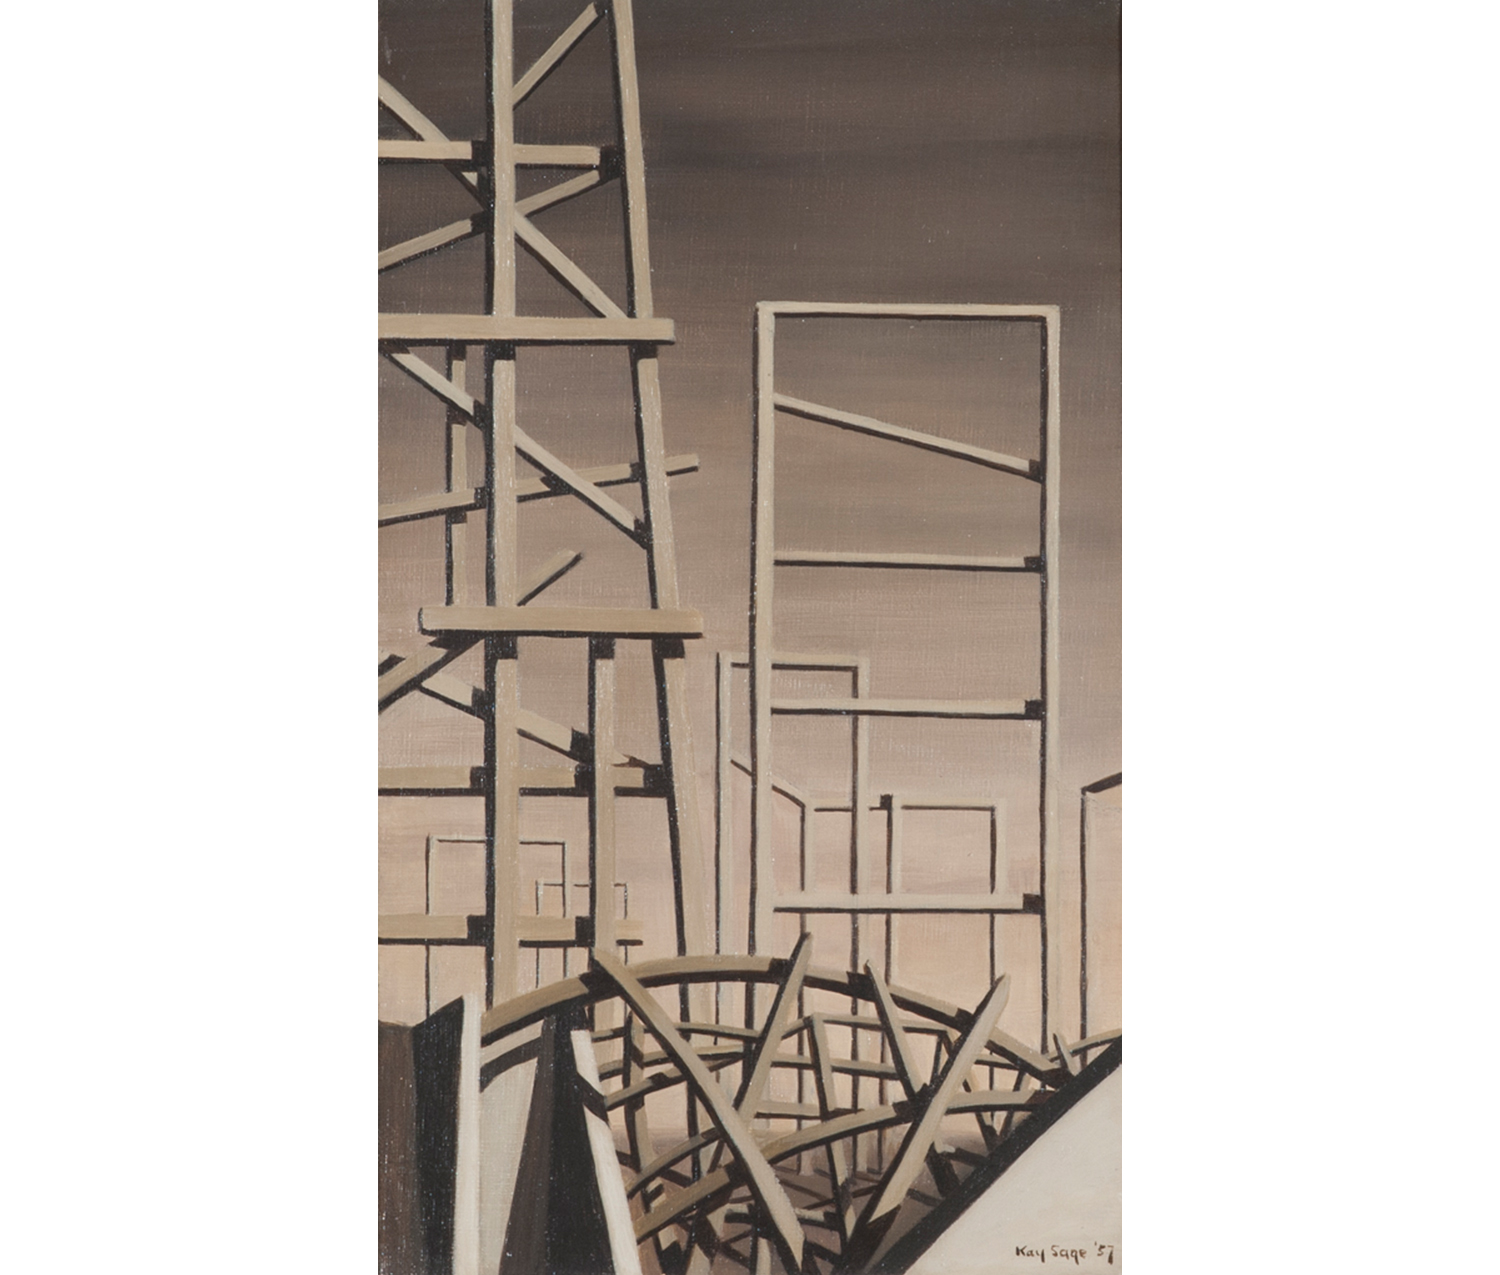 tall wood scaffolding-like shapes on grey background, curved bridge-like scaffolding shape at bottom